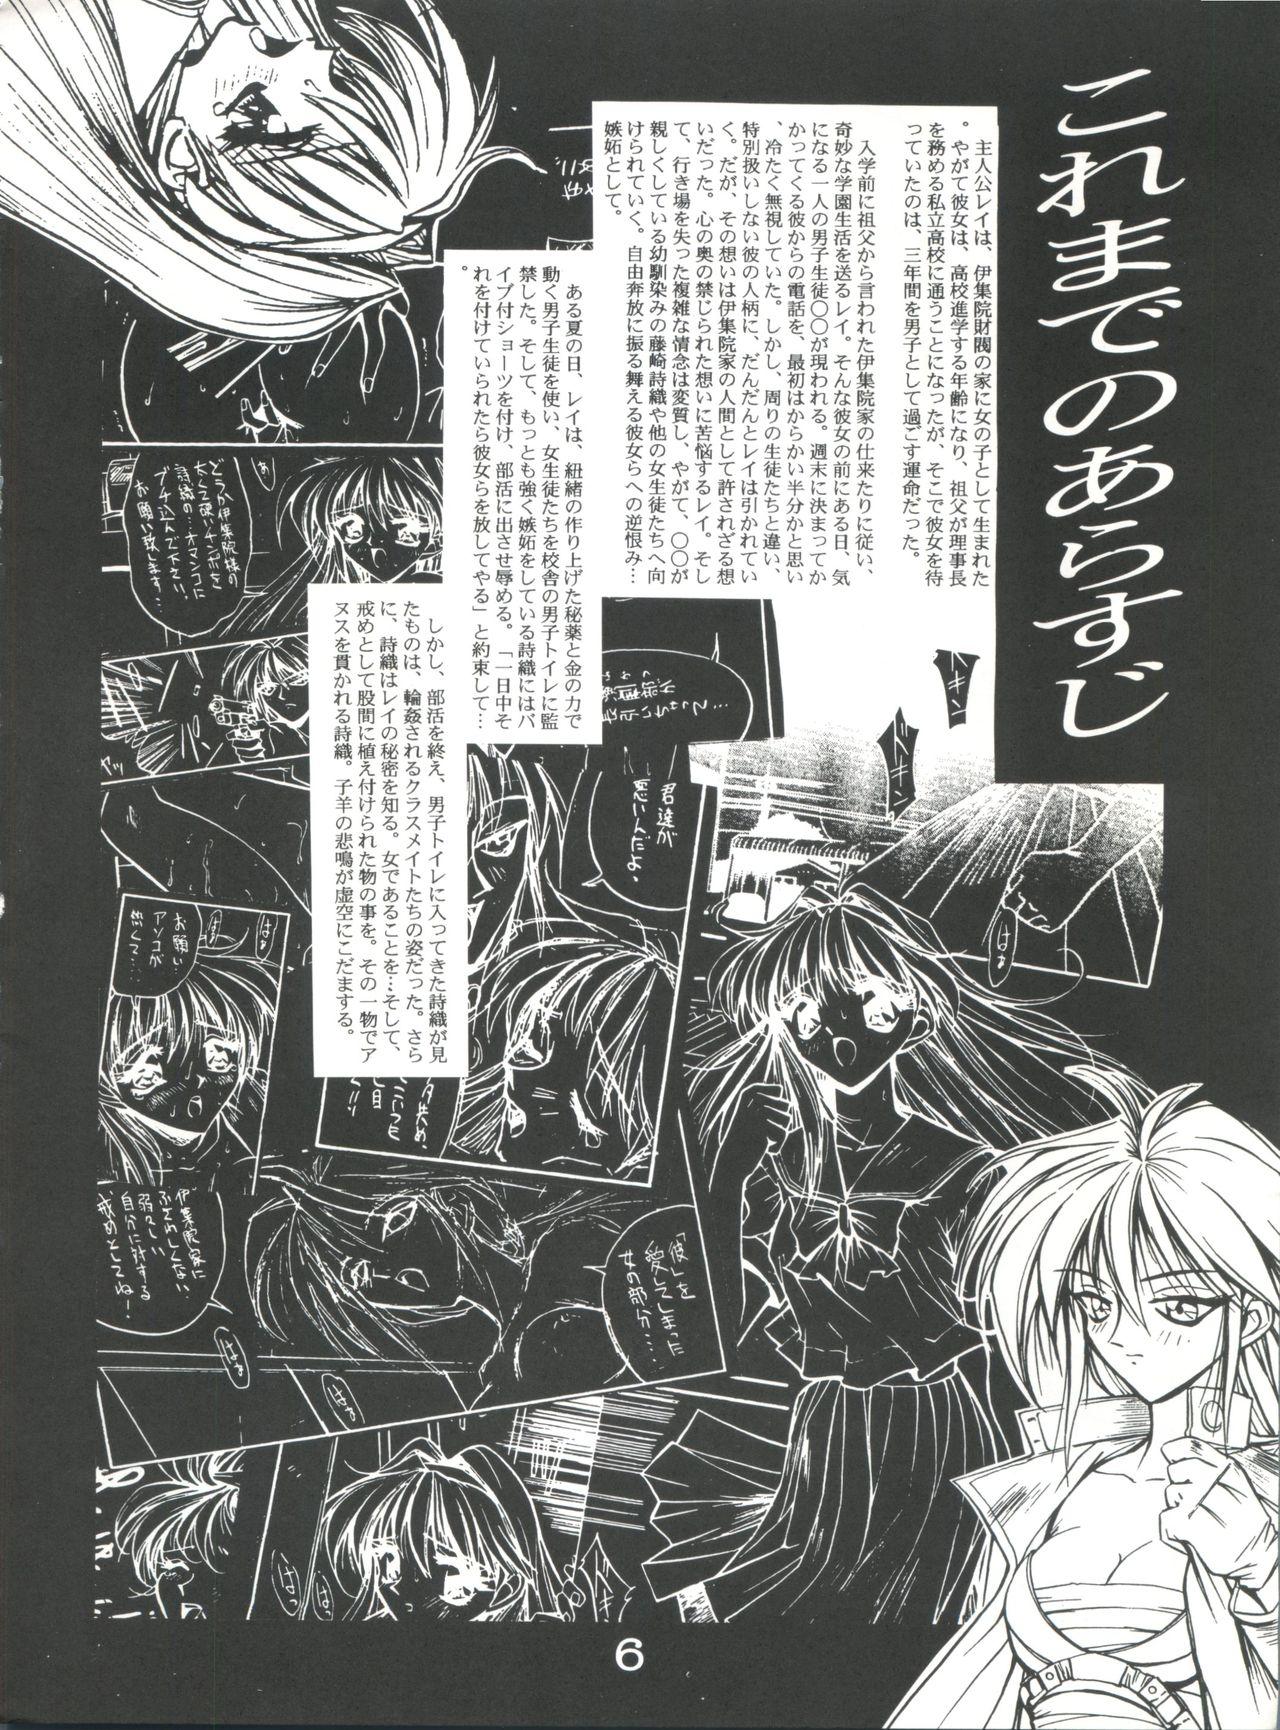 Curious Shiori's Hip - Tokimeki memorial Foot Job - Page 5